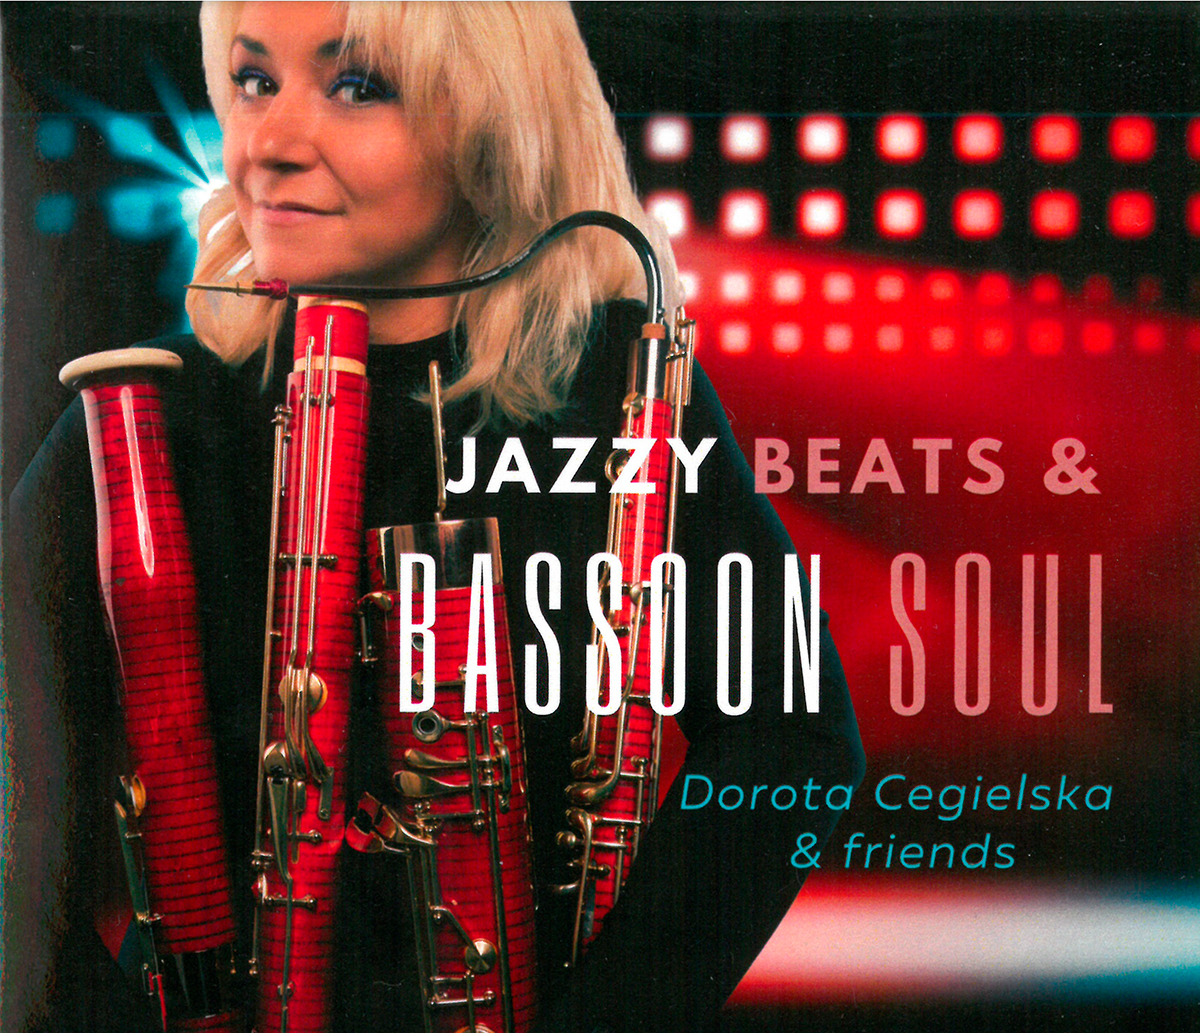 JAZZY BEATS & BASSOON SOUL